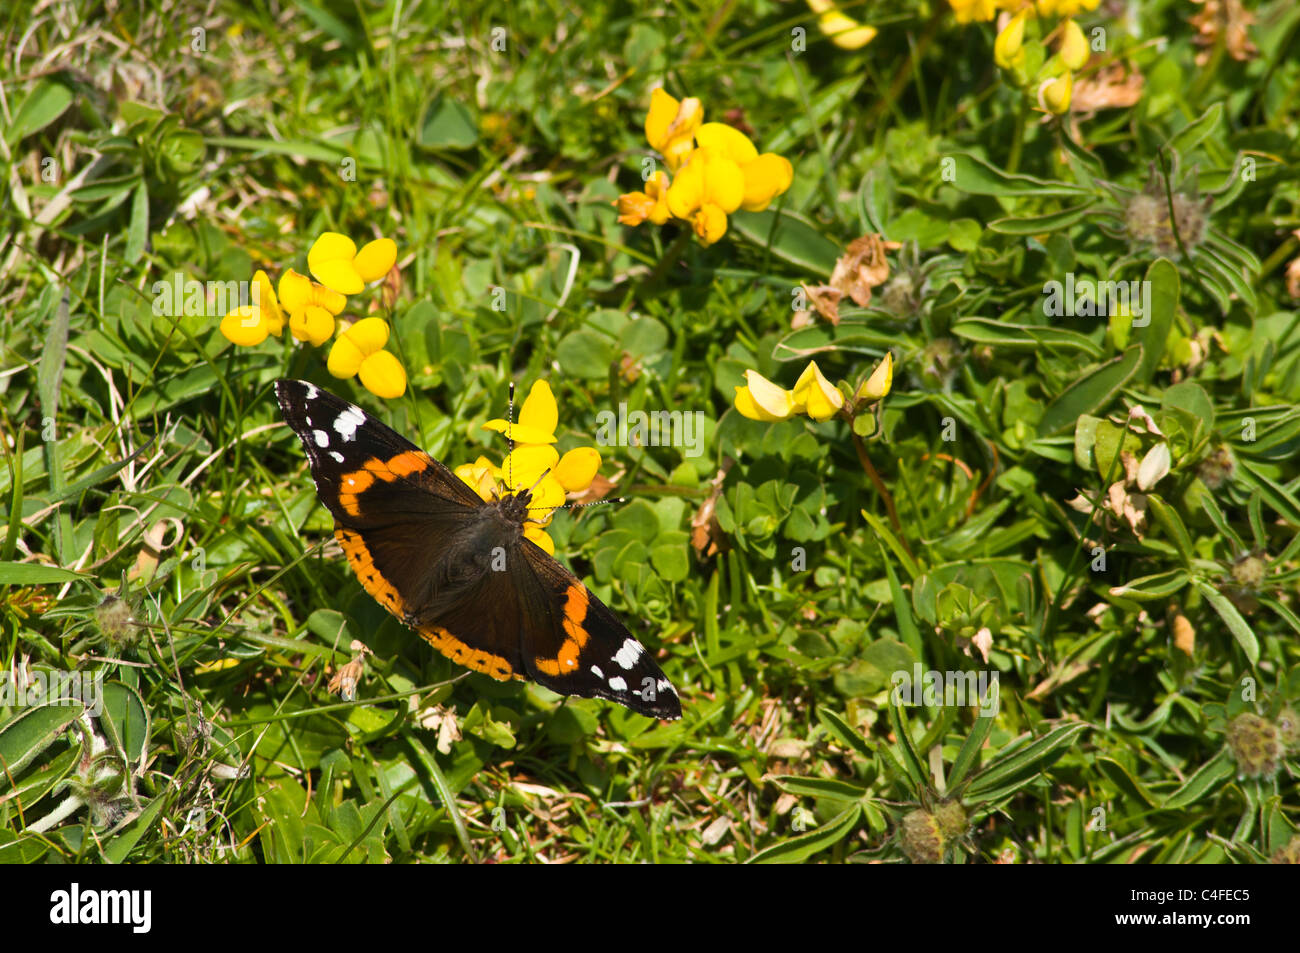 dh Red Admiral papillons UK SCOTLAND Flying Yellow Wildflower huile de pied d'oiseau lotus coniculatus vanessa atalanta grande-bretagne Banque D'Images